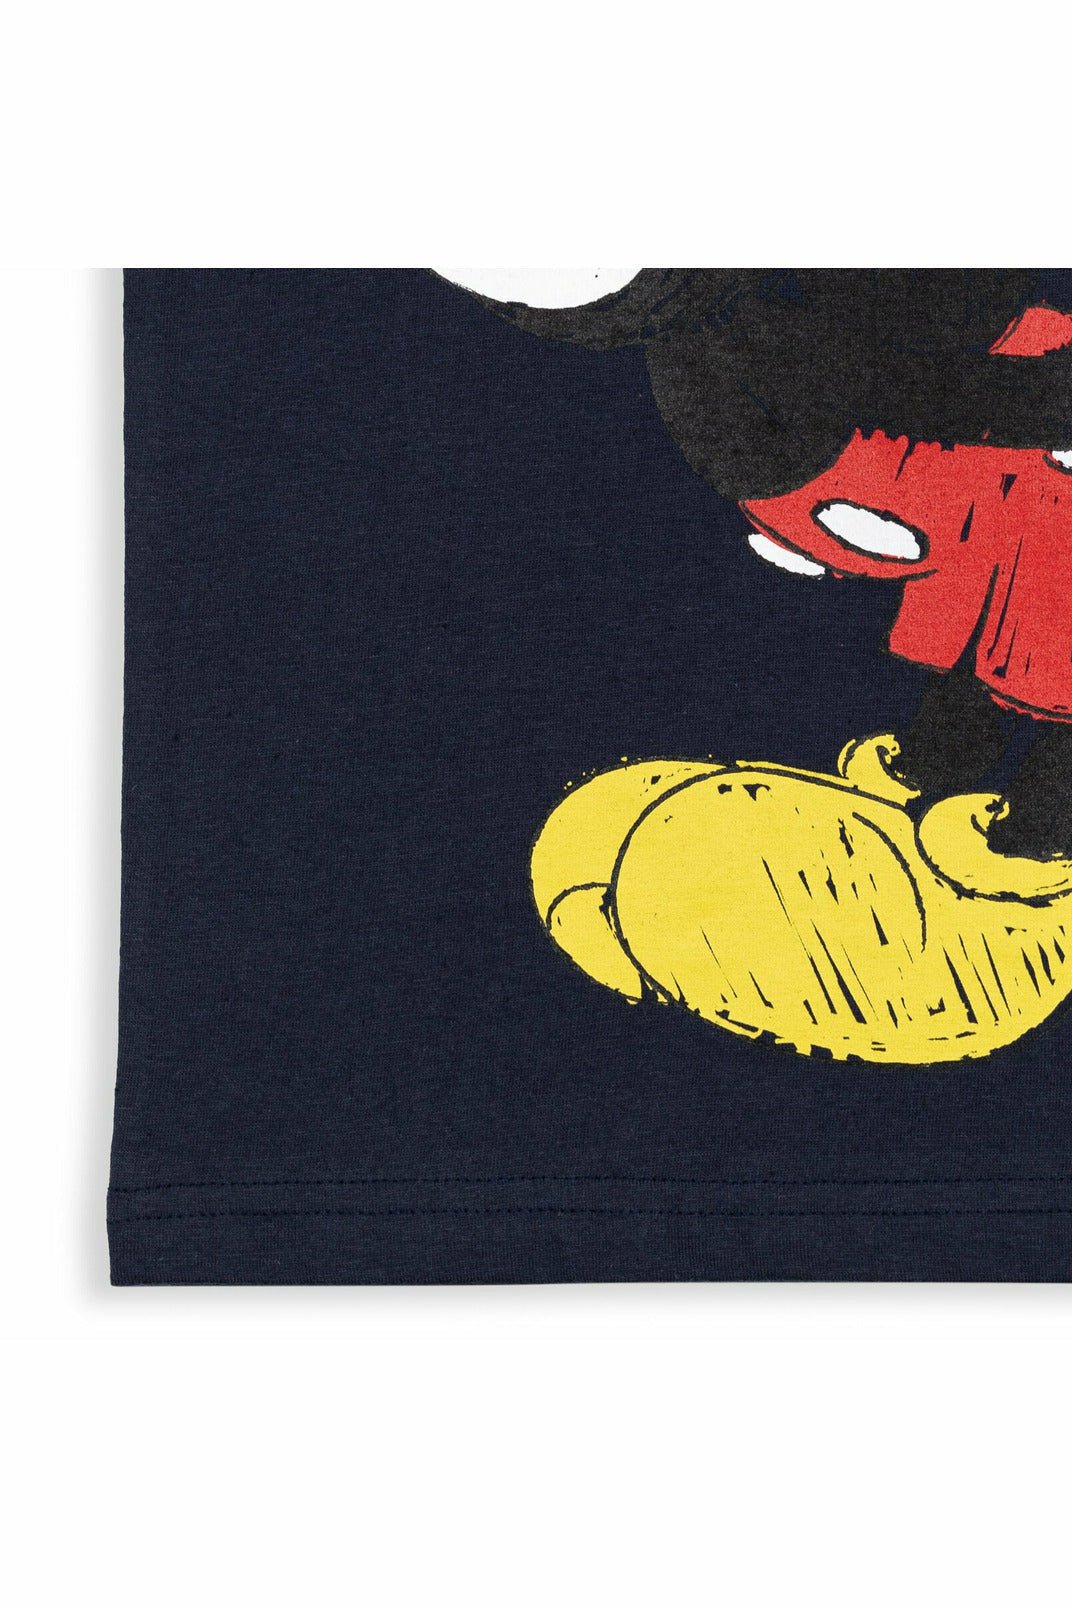 Disney Mickey Mouse Graphic T-Shirt - imagikids